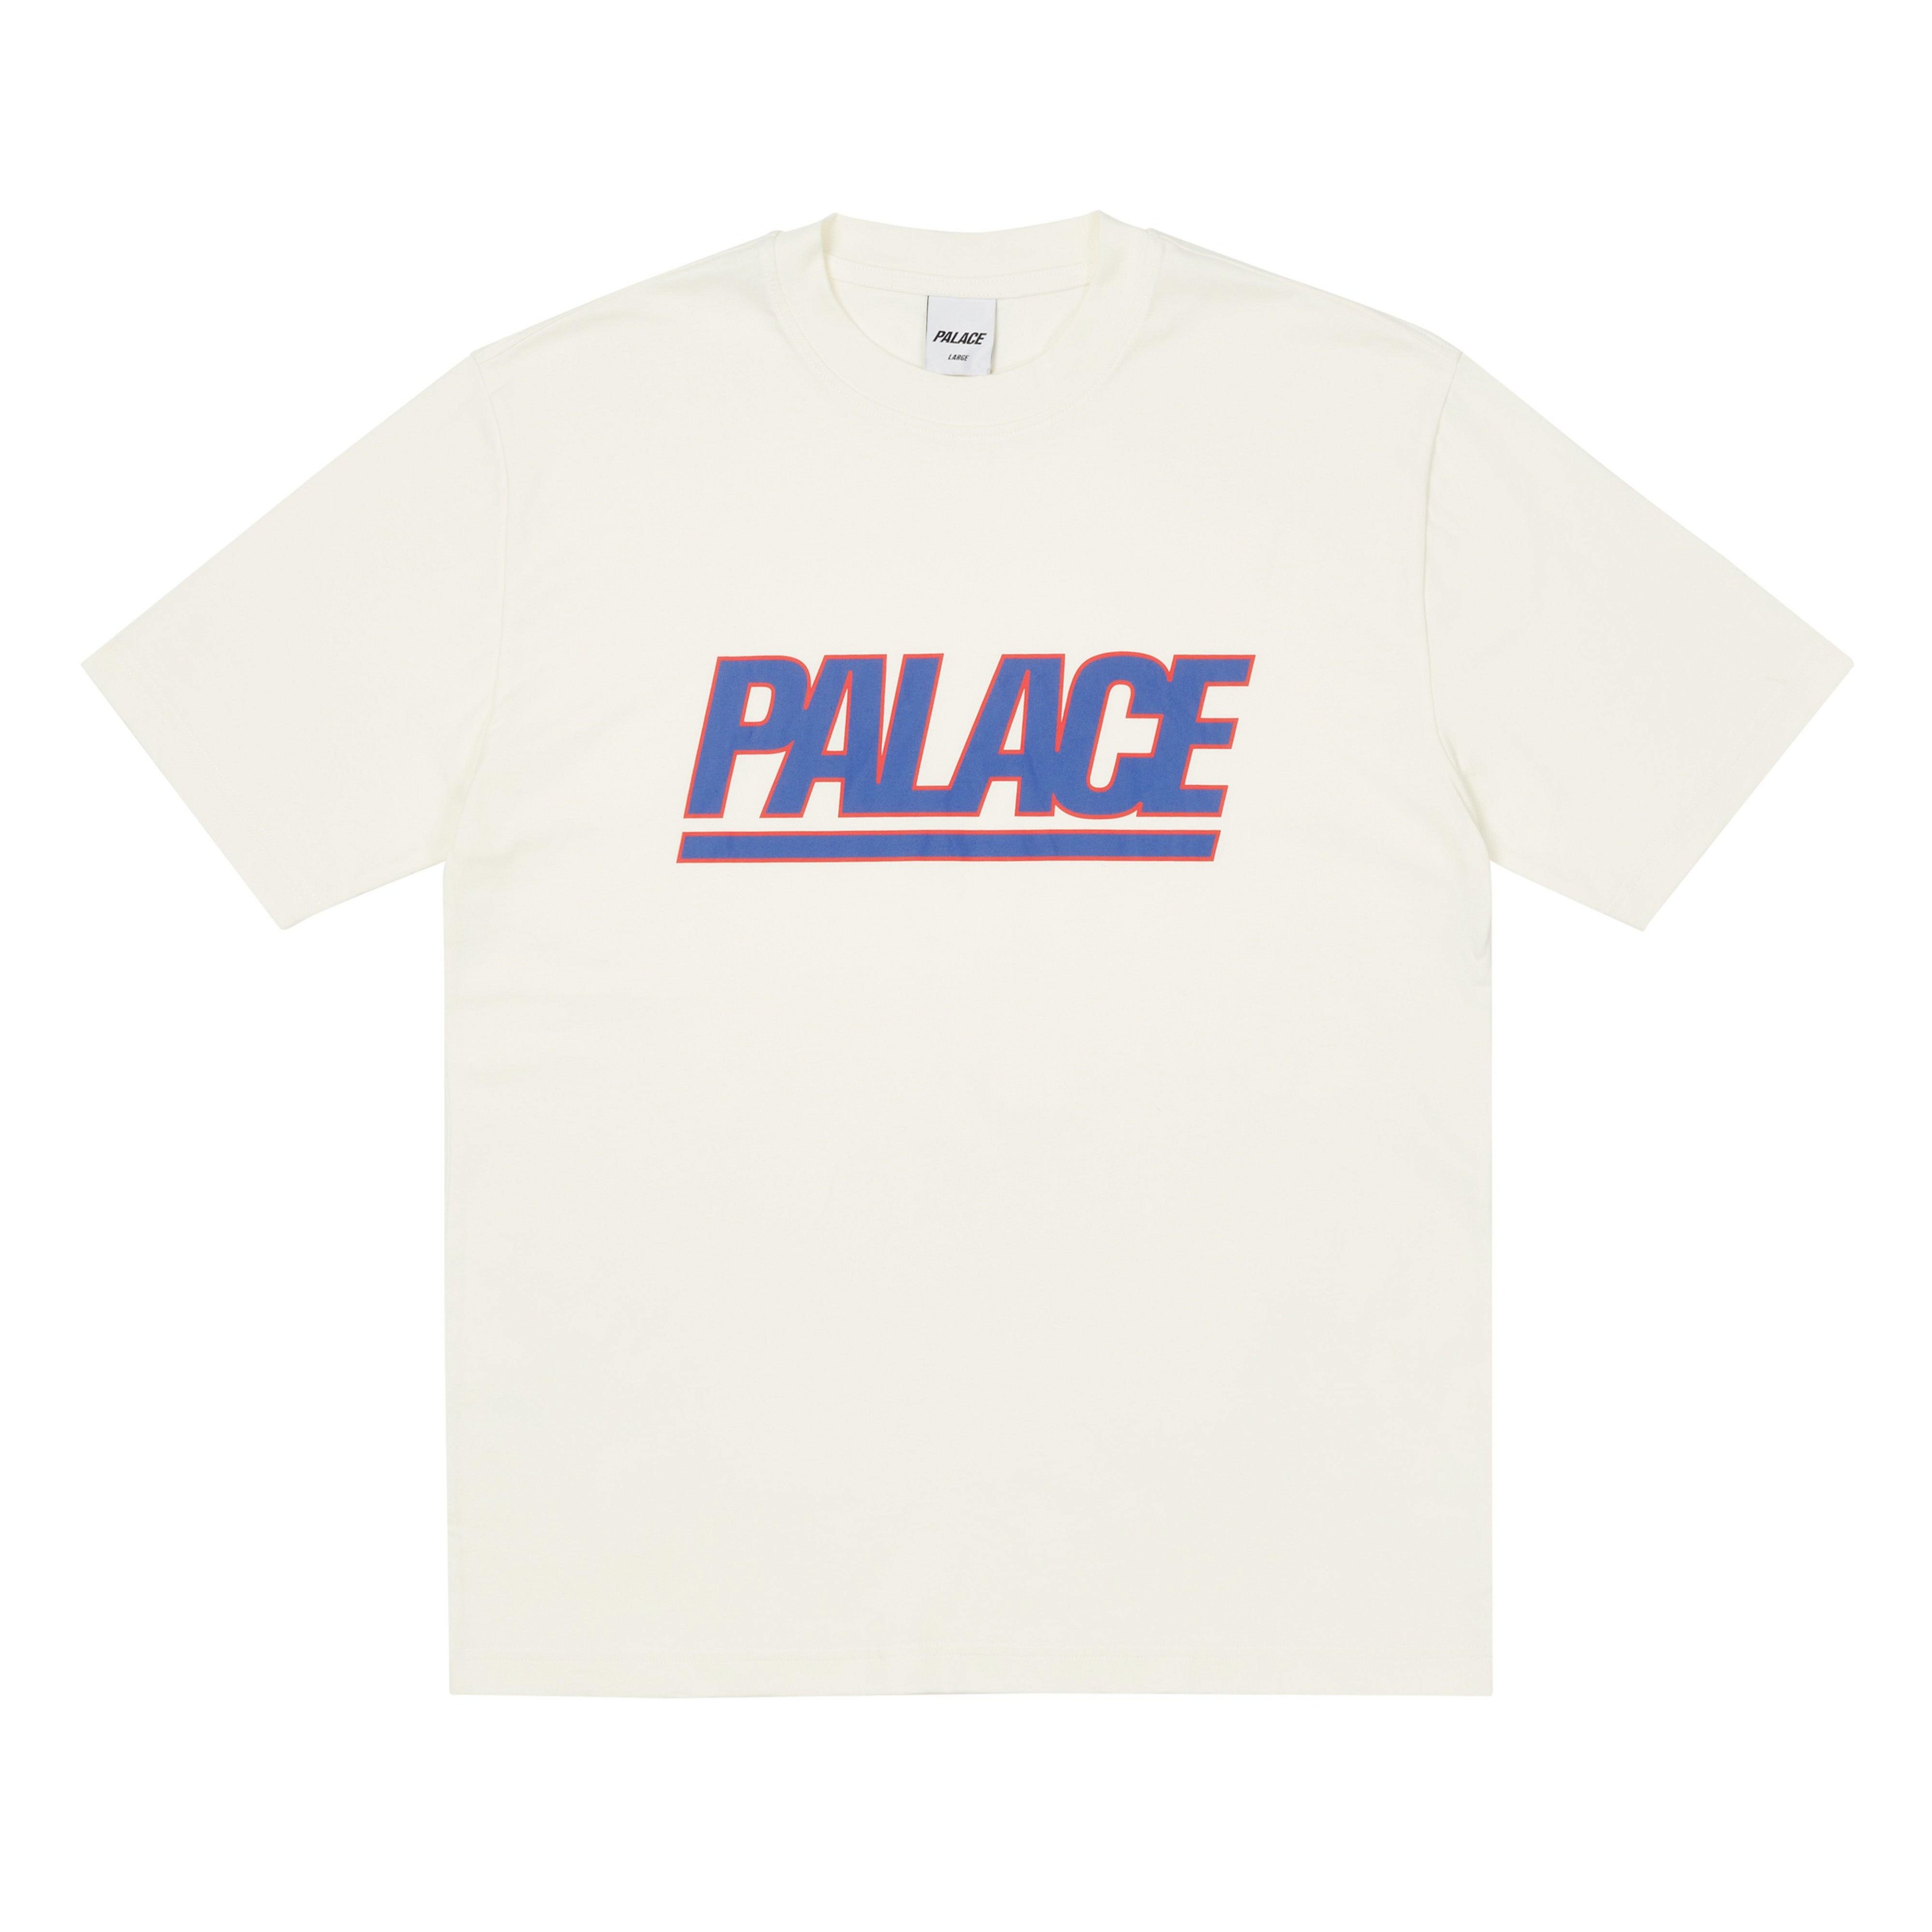 Palace - Gigantic T-Shirt - (White) by PALACE